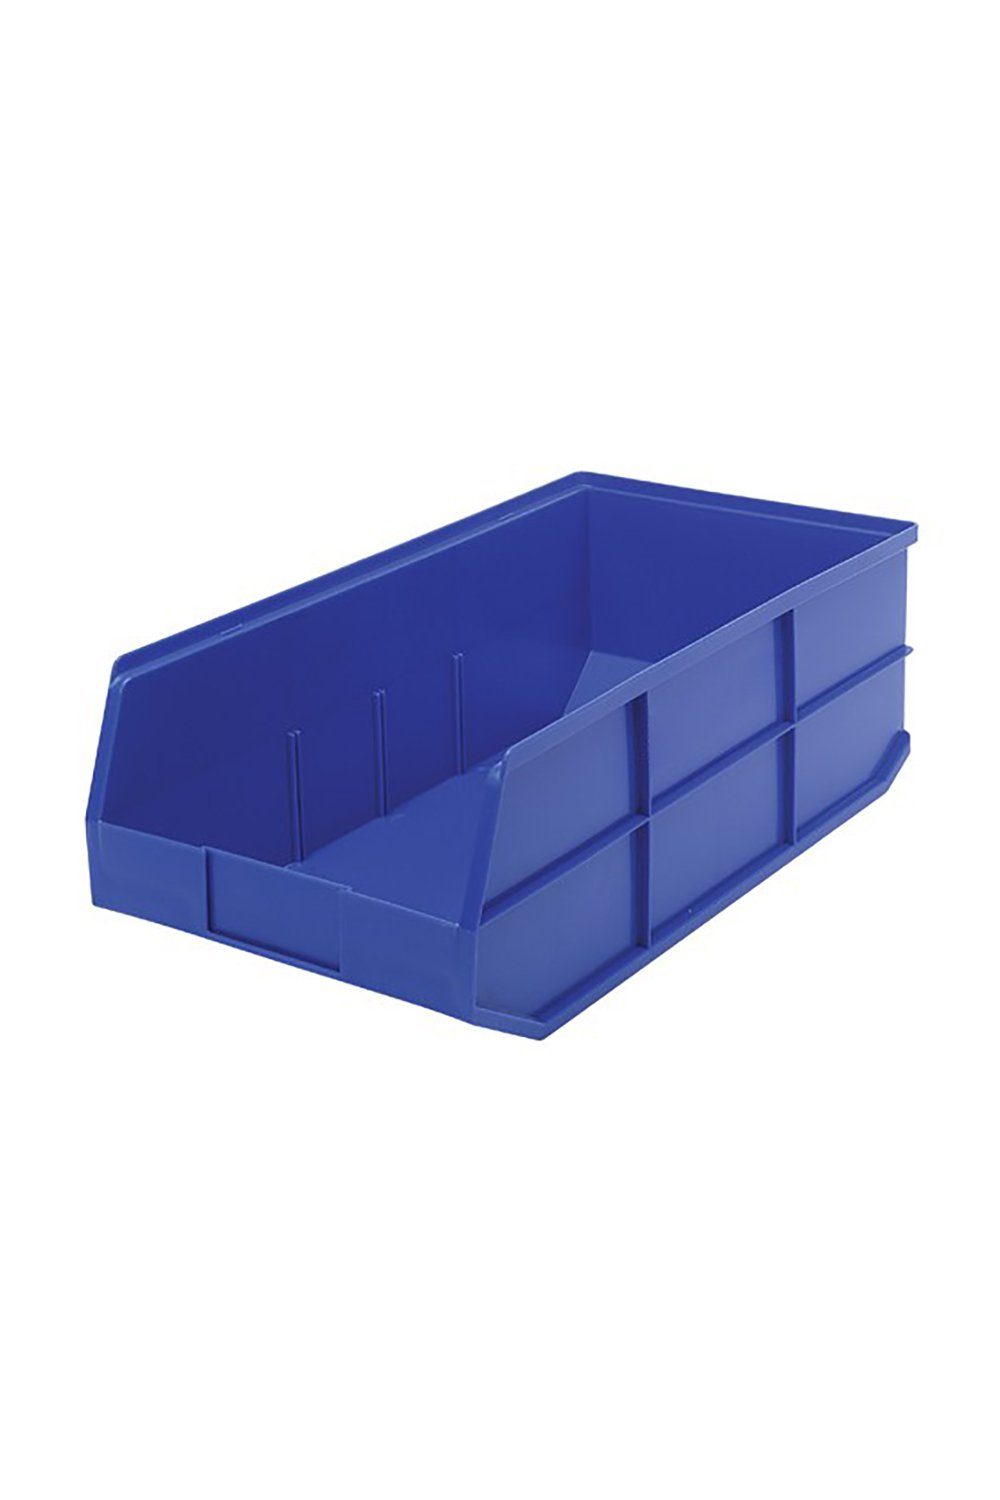 Shelf Bin for 24"D Shelves Bins & Containers Acart 20-1/2" x 11" x 7" Blue 